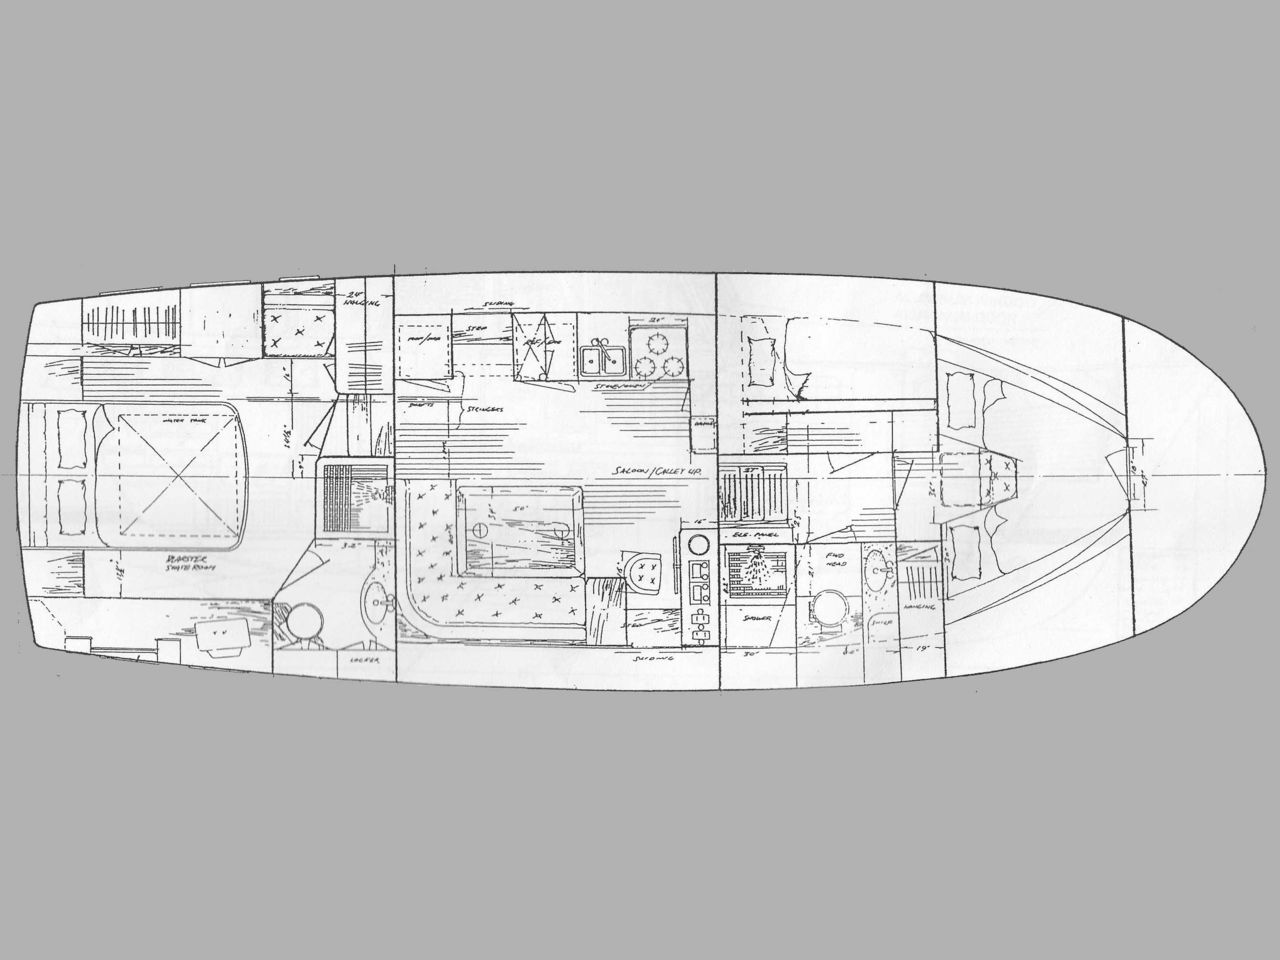 CA-Yachts Classic Adria Trawler - imagen 3